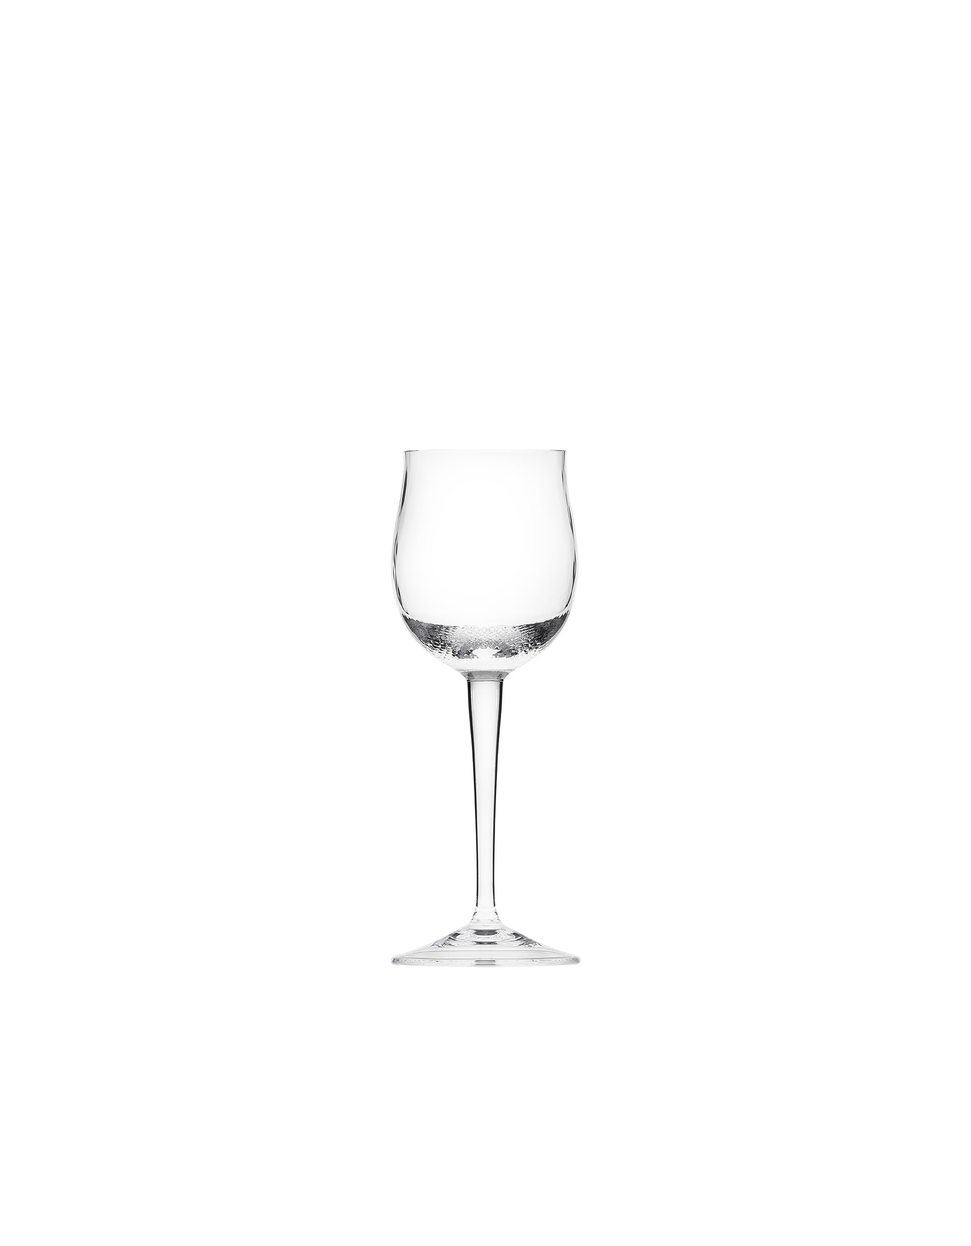 Wellenspiel wine glass, 160 ml